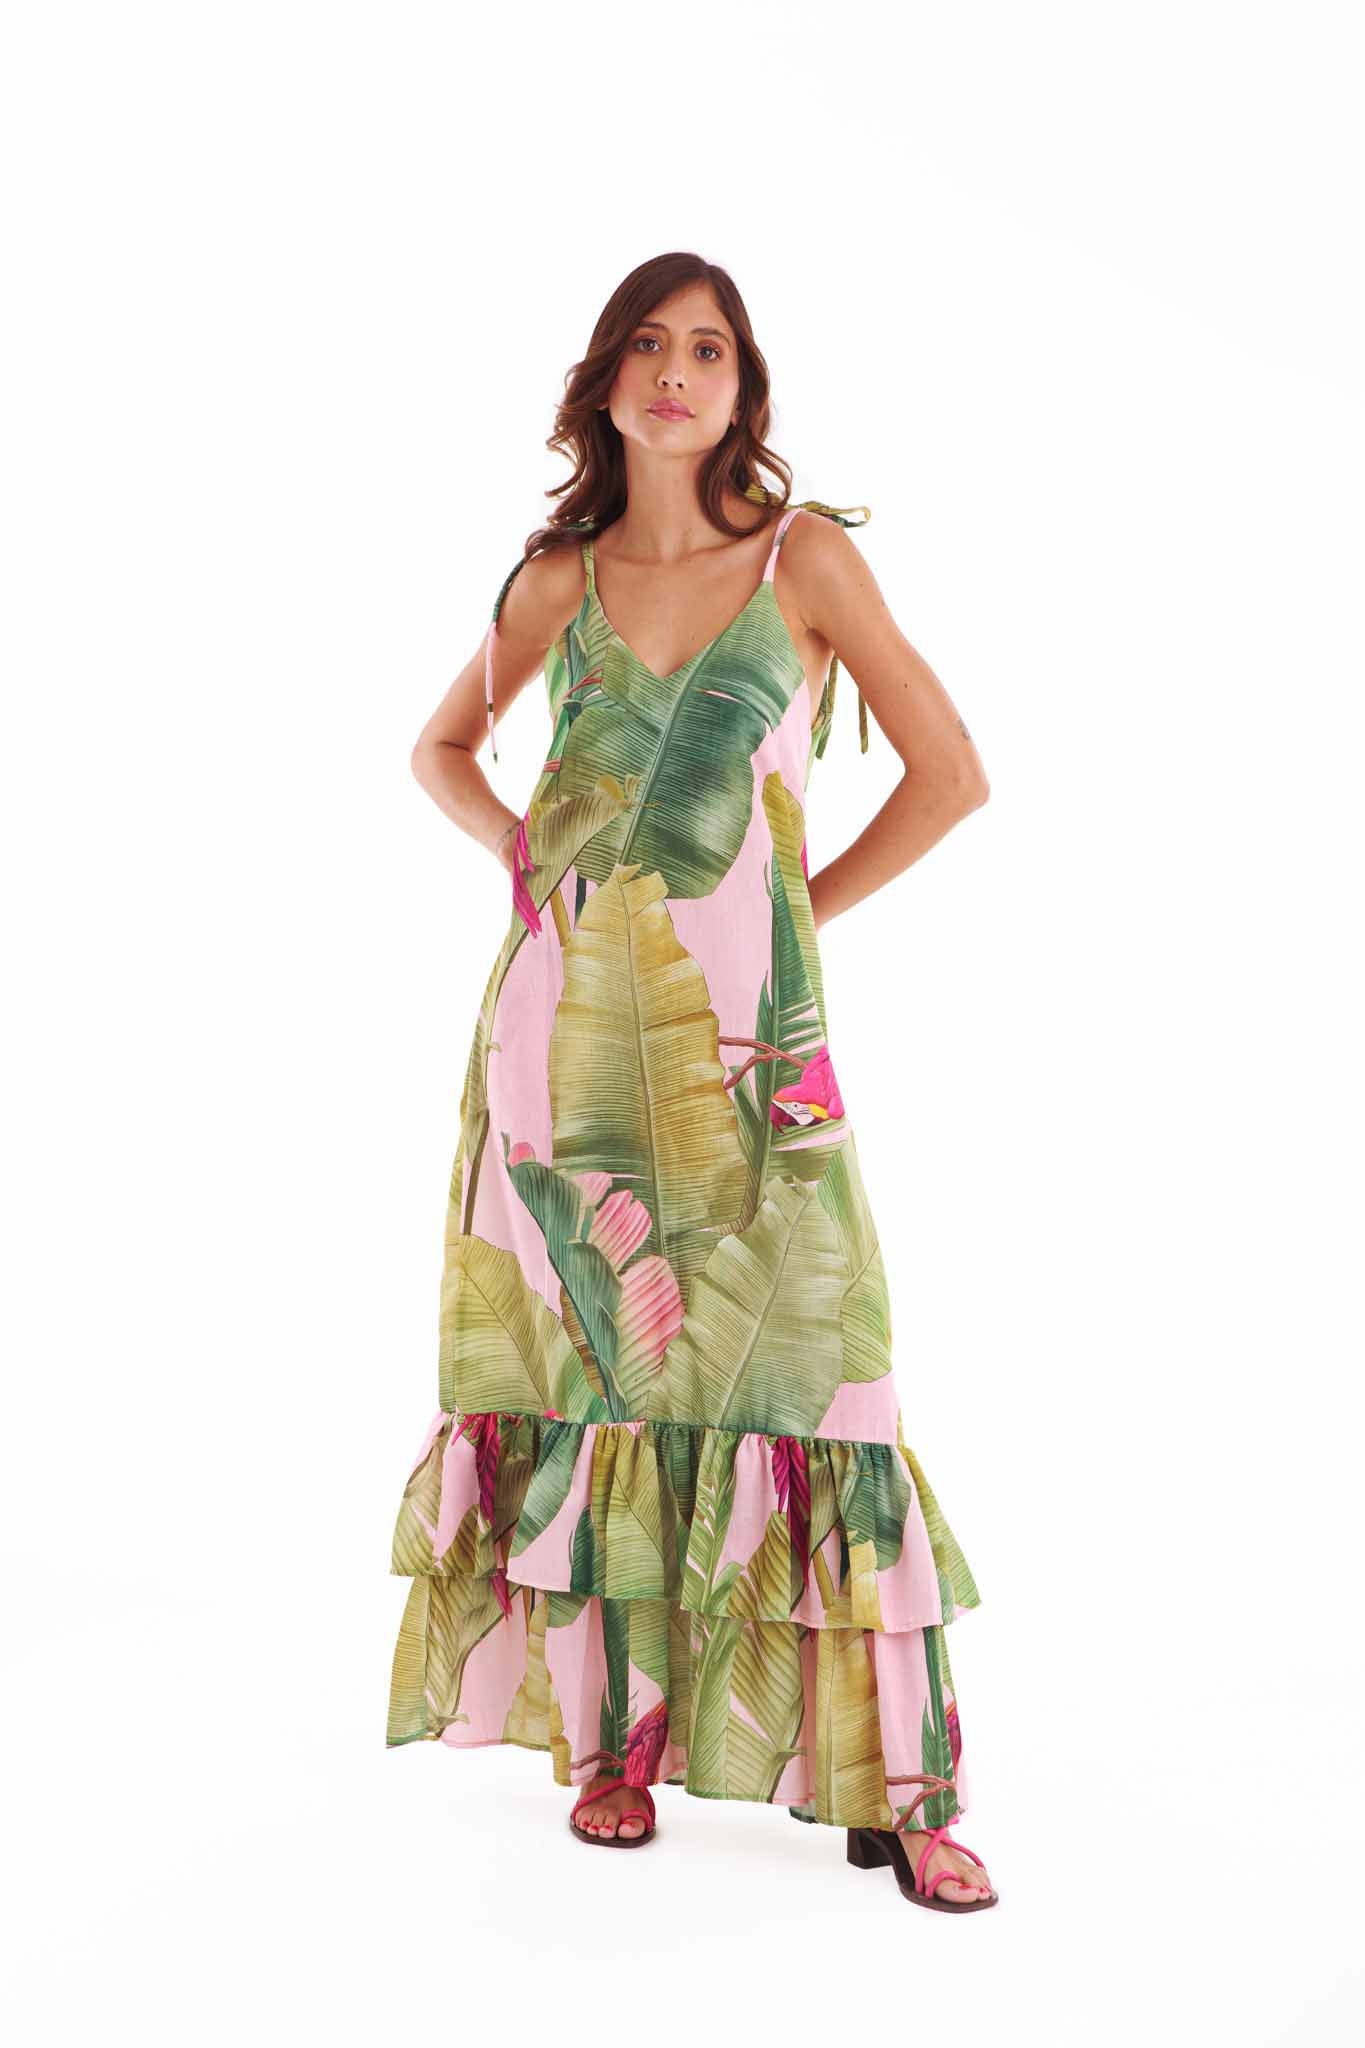 FR Paradisiaca Coco 0601- Dress